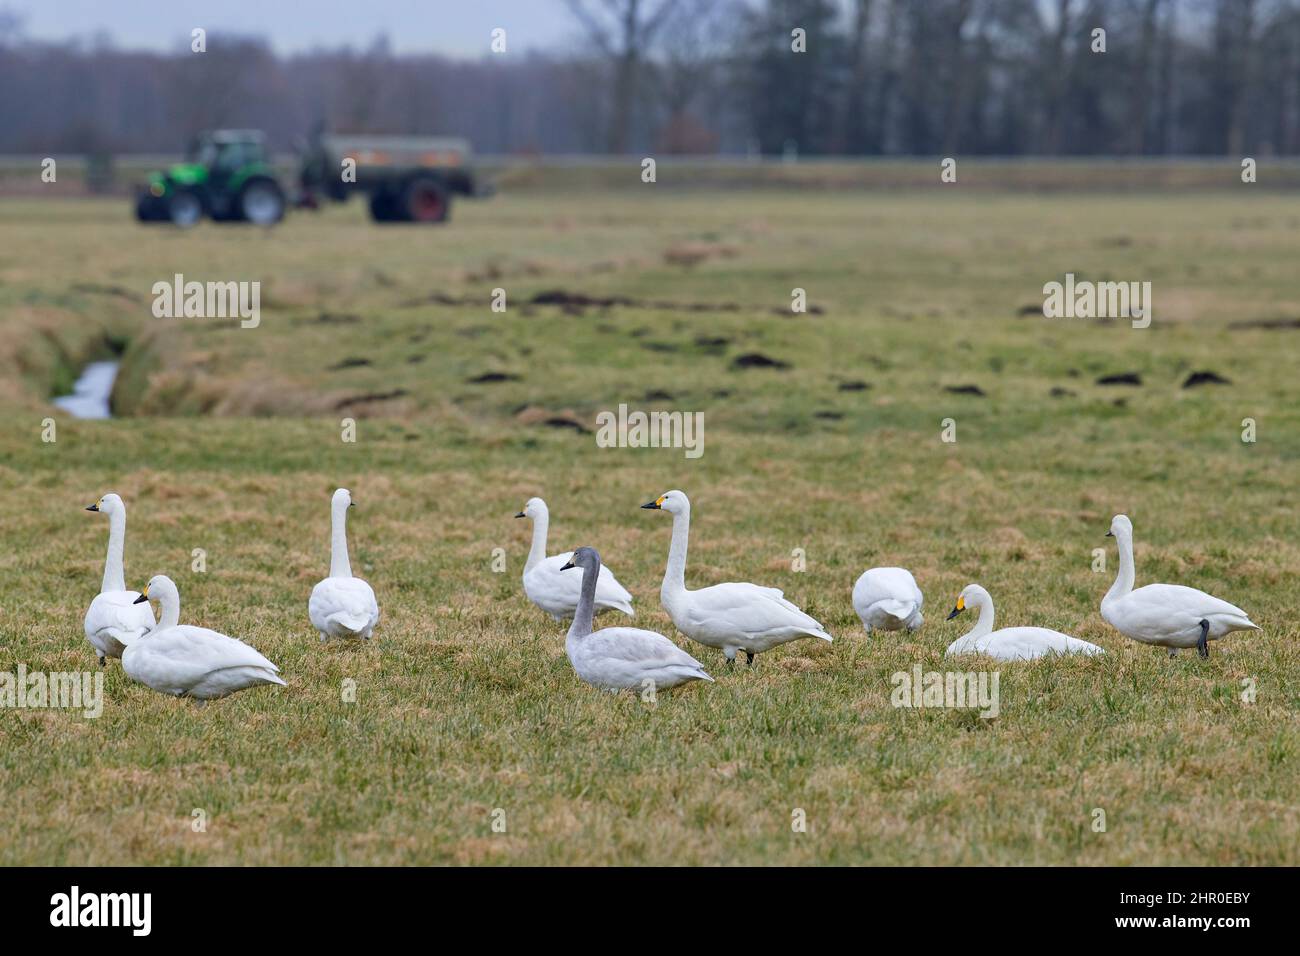 Flock of tundra swans / Bewick's swans (Cygnus bewickii / Cygnus columbianus bewickii) foraging in farmland / field / grassland with tractor Stock Photo